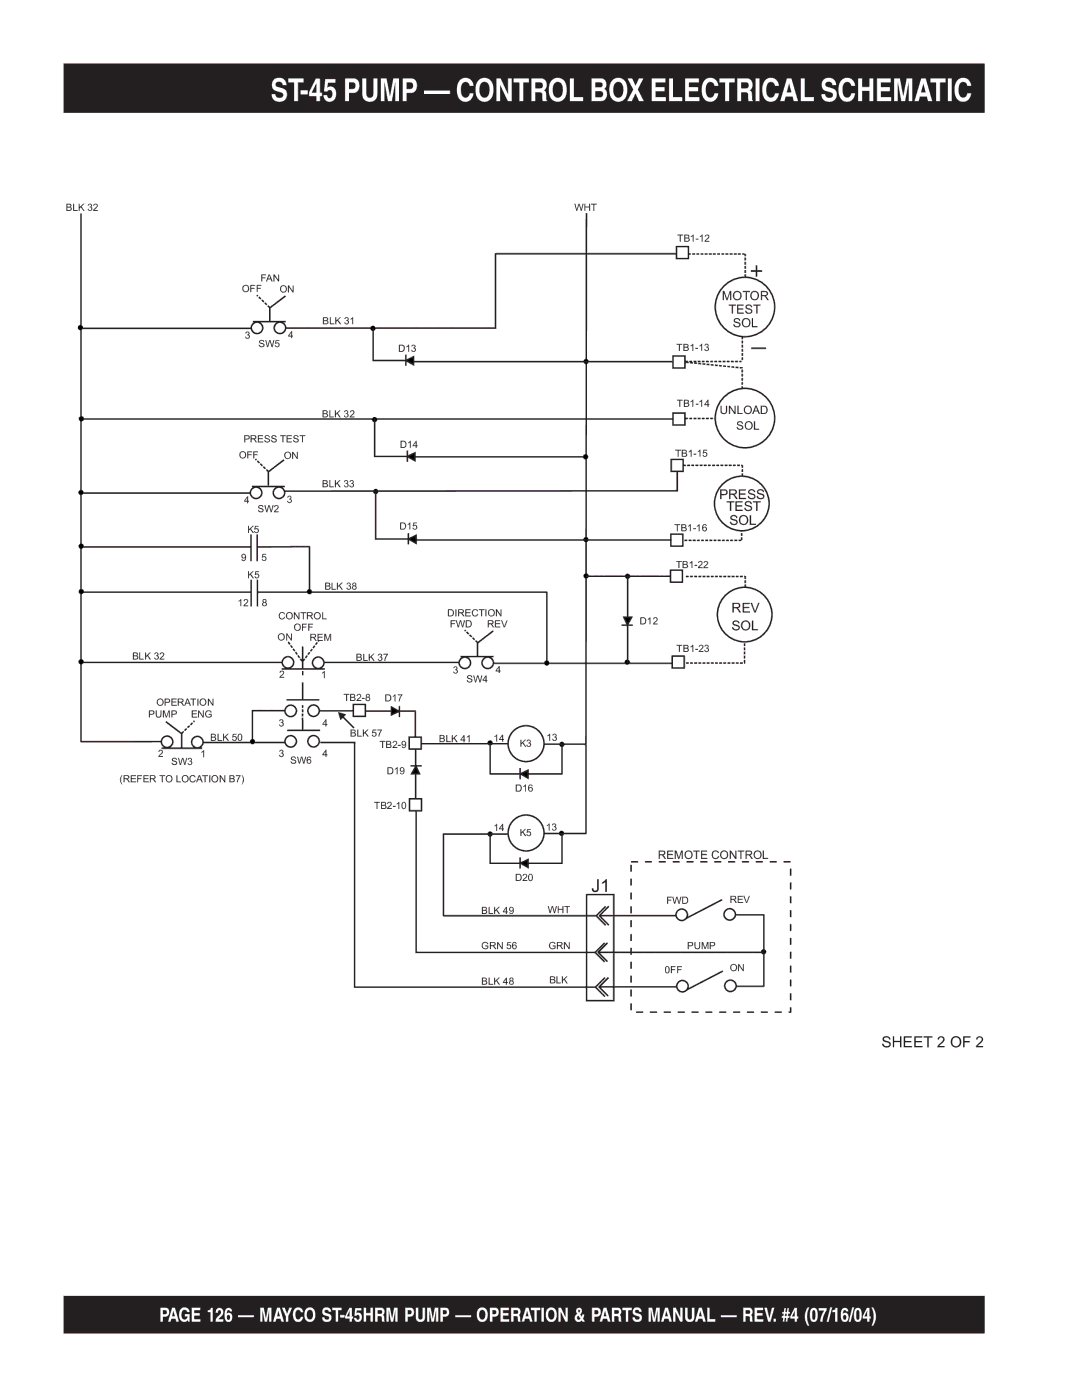 Multiquip ST-45HRM manual ST-45 Pump Control BOX Electrical Schematic 